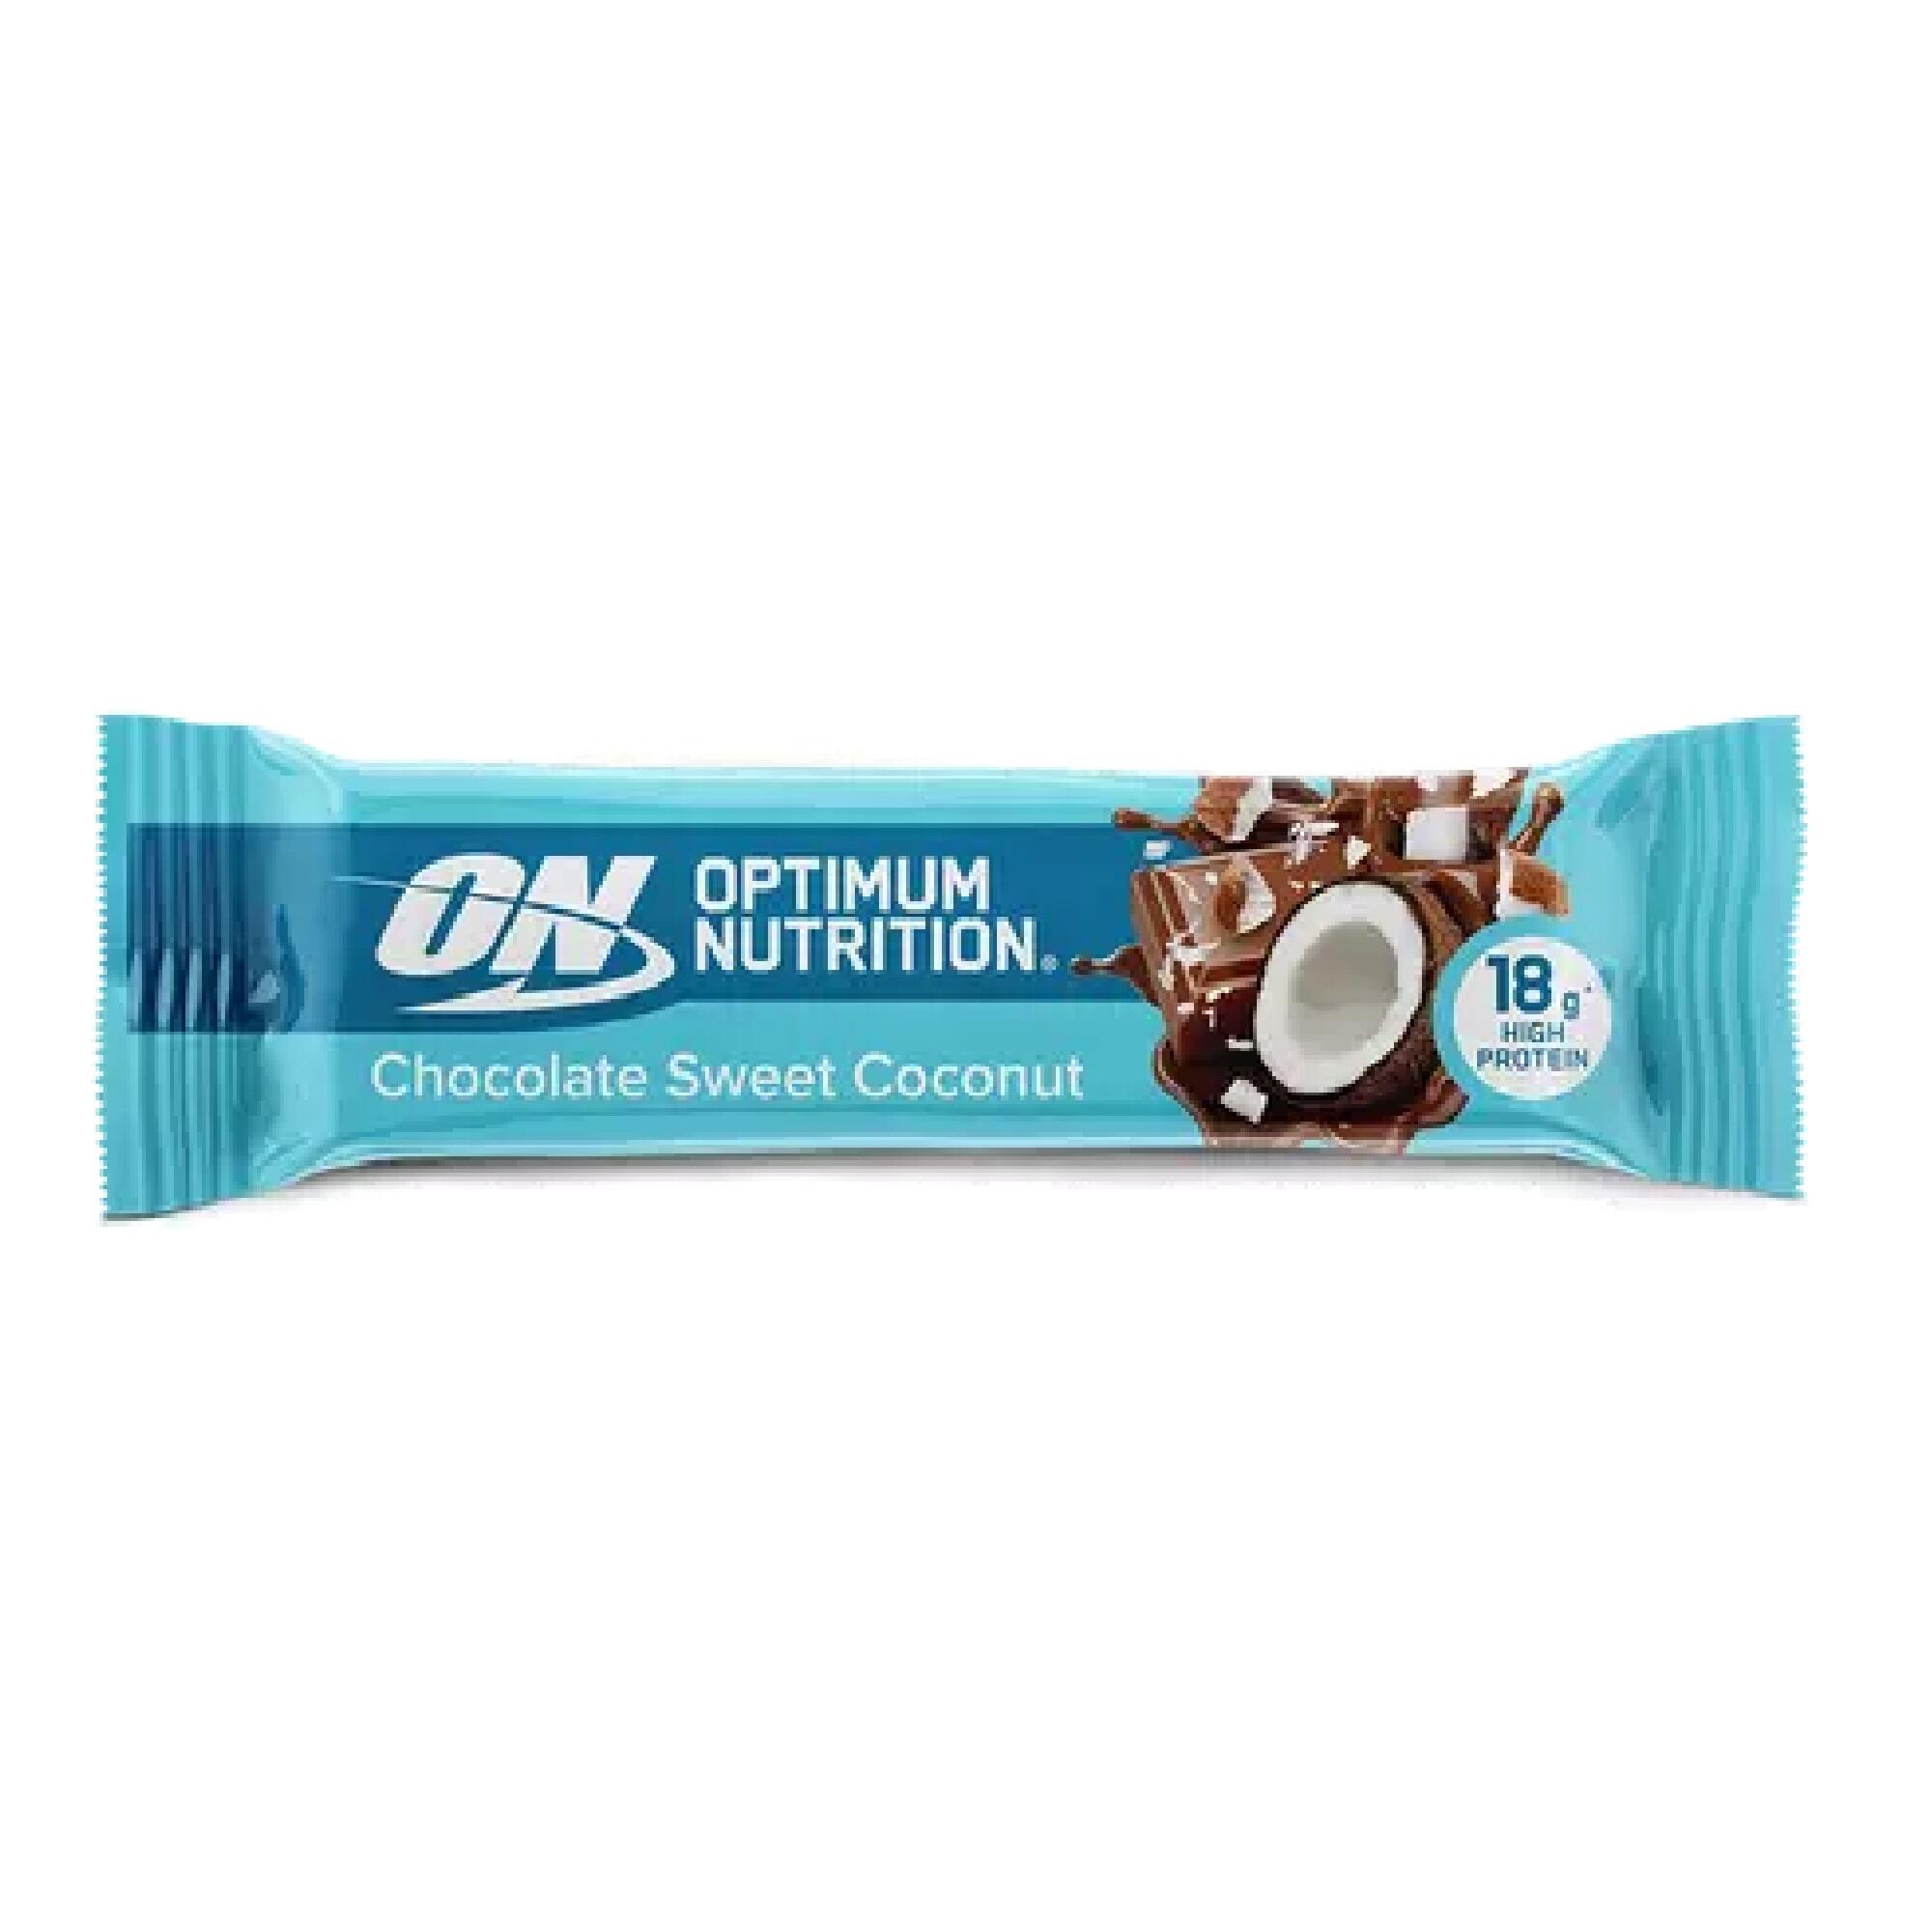 OPTIMUM NUTRITION Chocolate Sweet Coconut Protein Bar